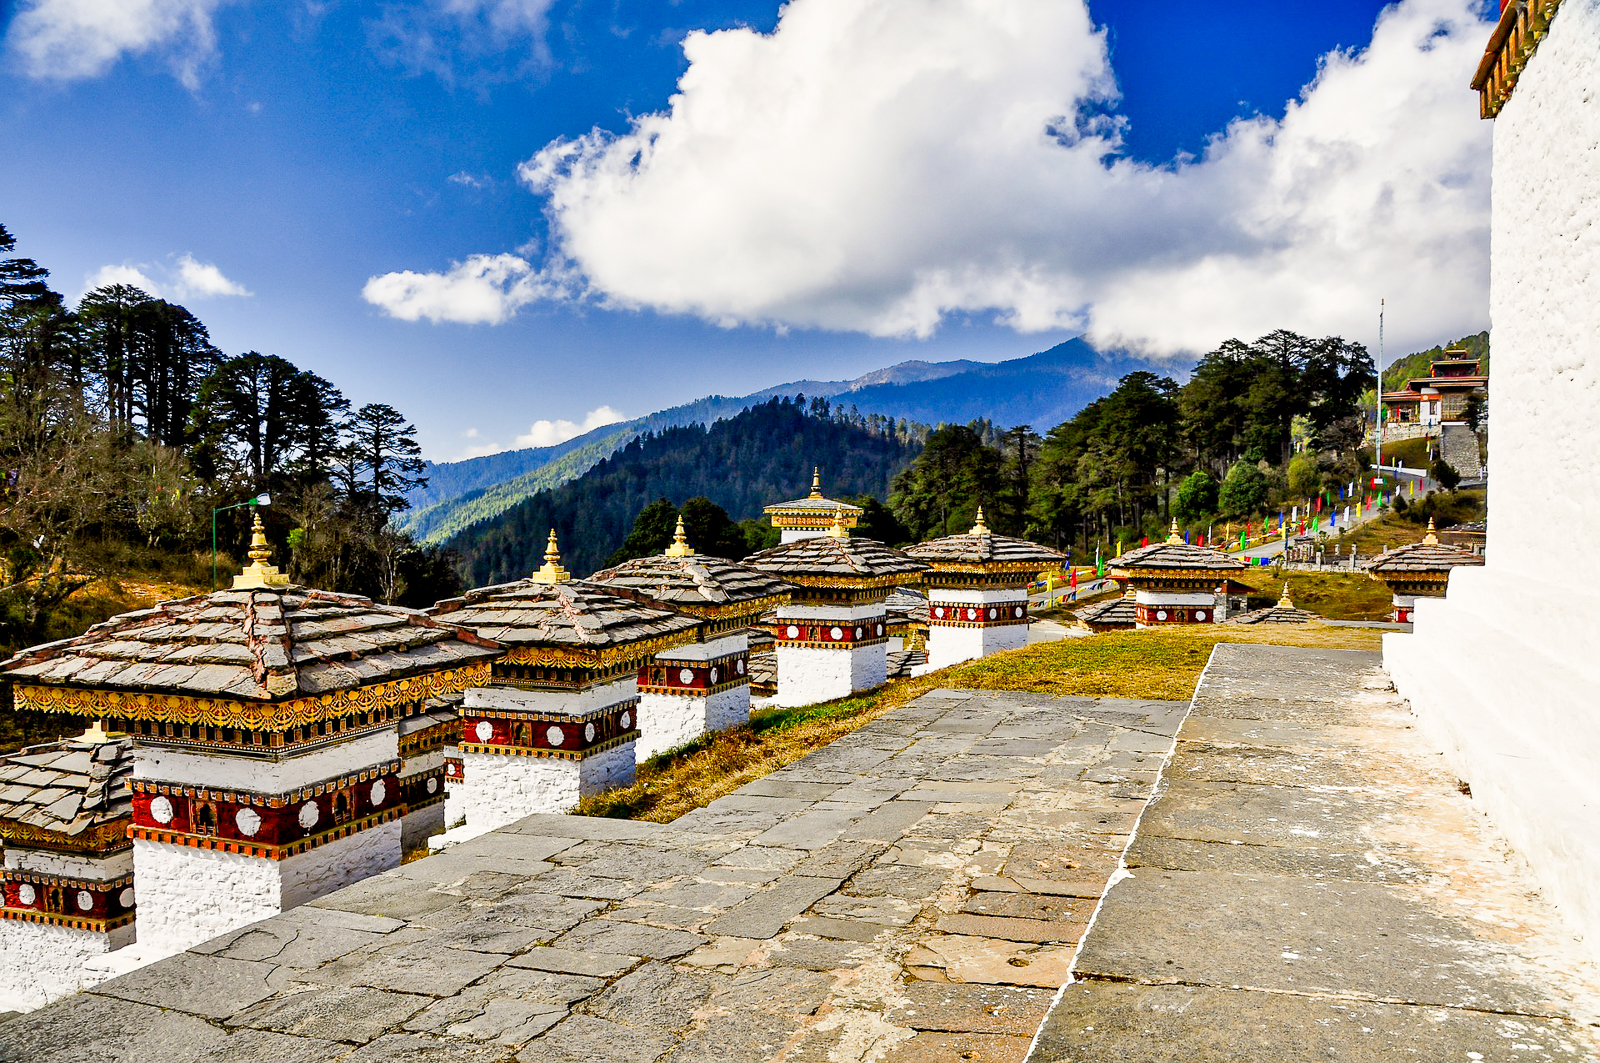 Thimpu Valley temple in Bhutan